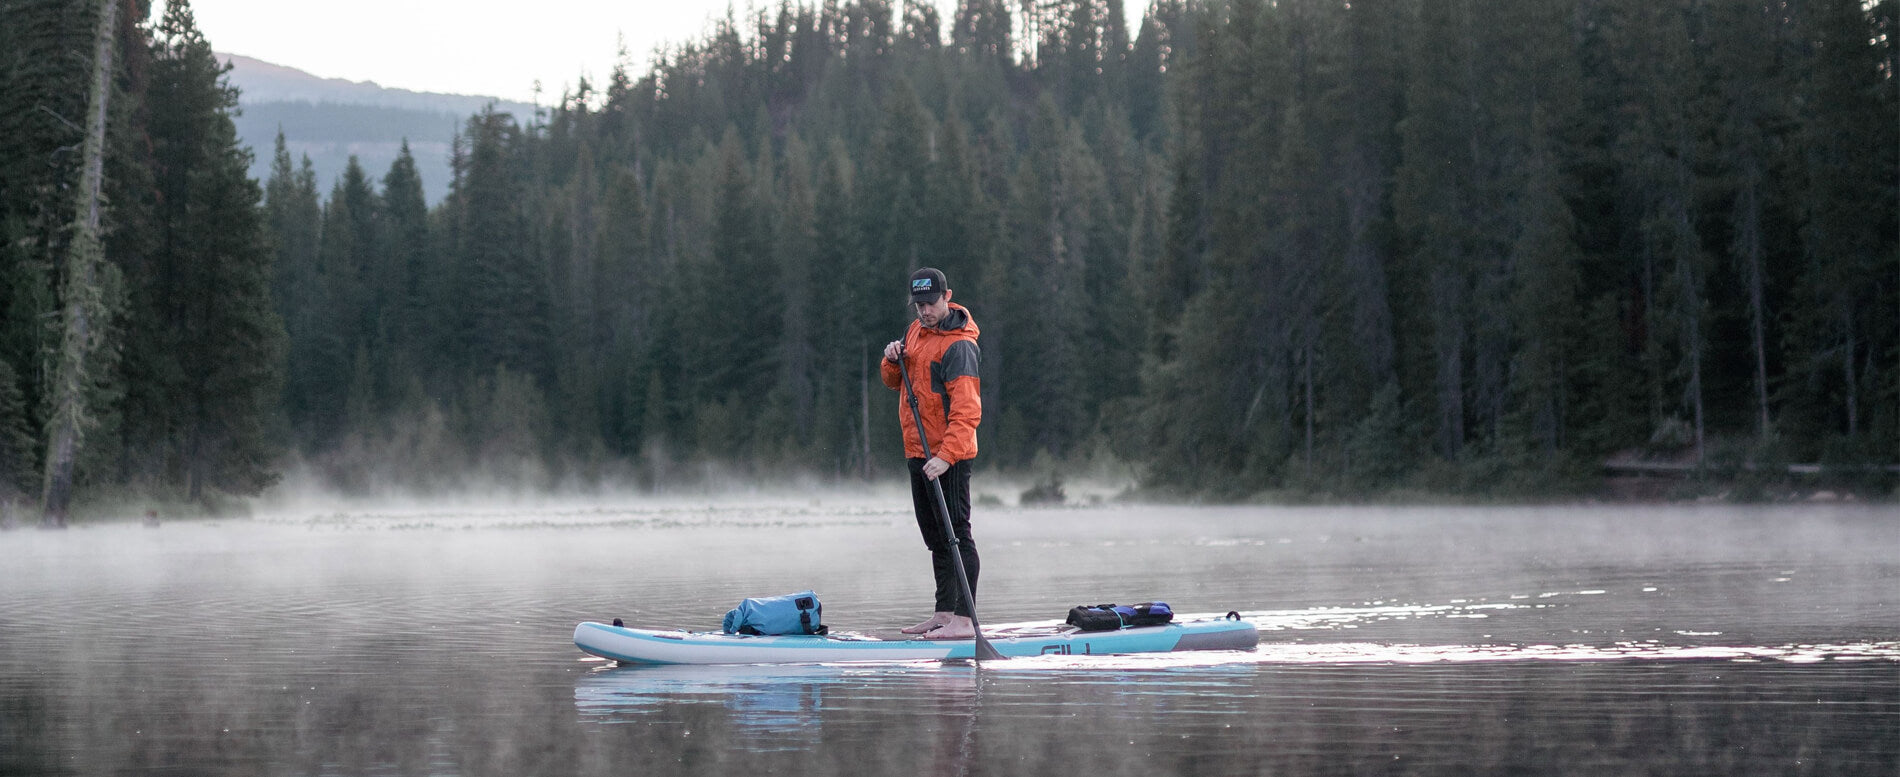 Man wearing a orange jacket paddle boarding on a lake